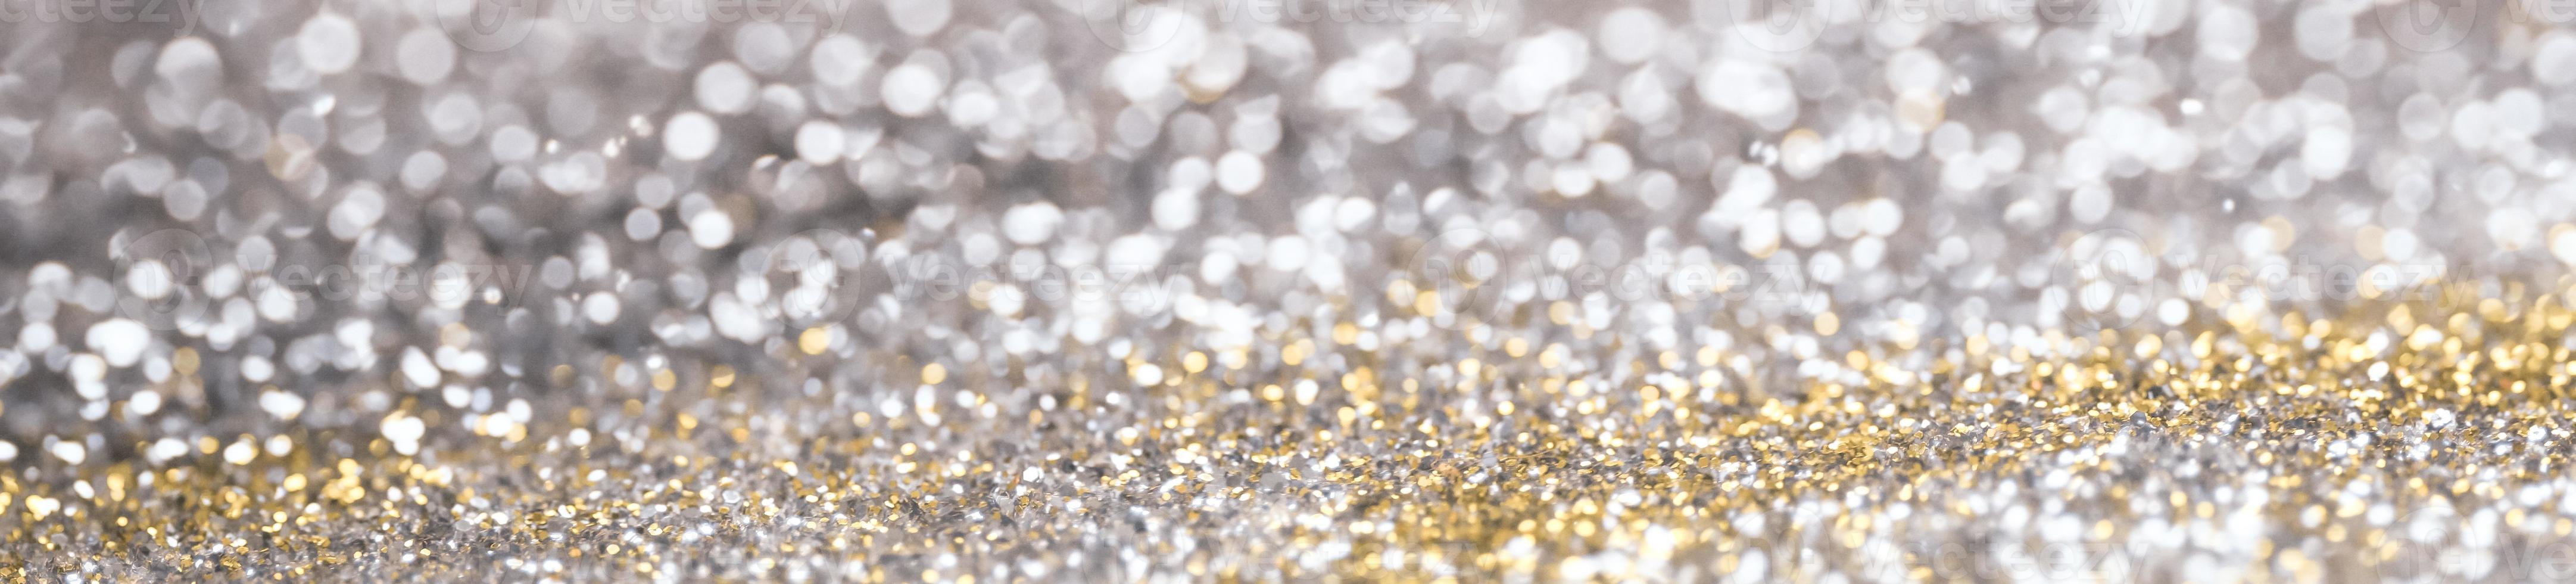 Silber und Gold Bokeh Glitter foto